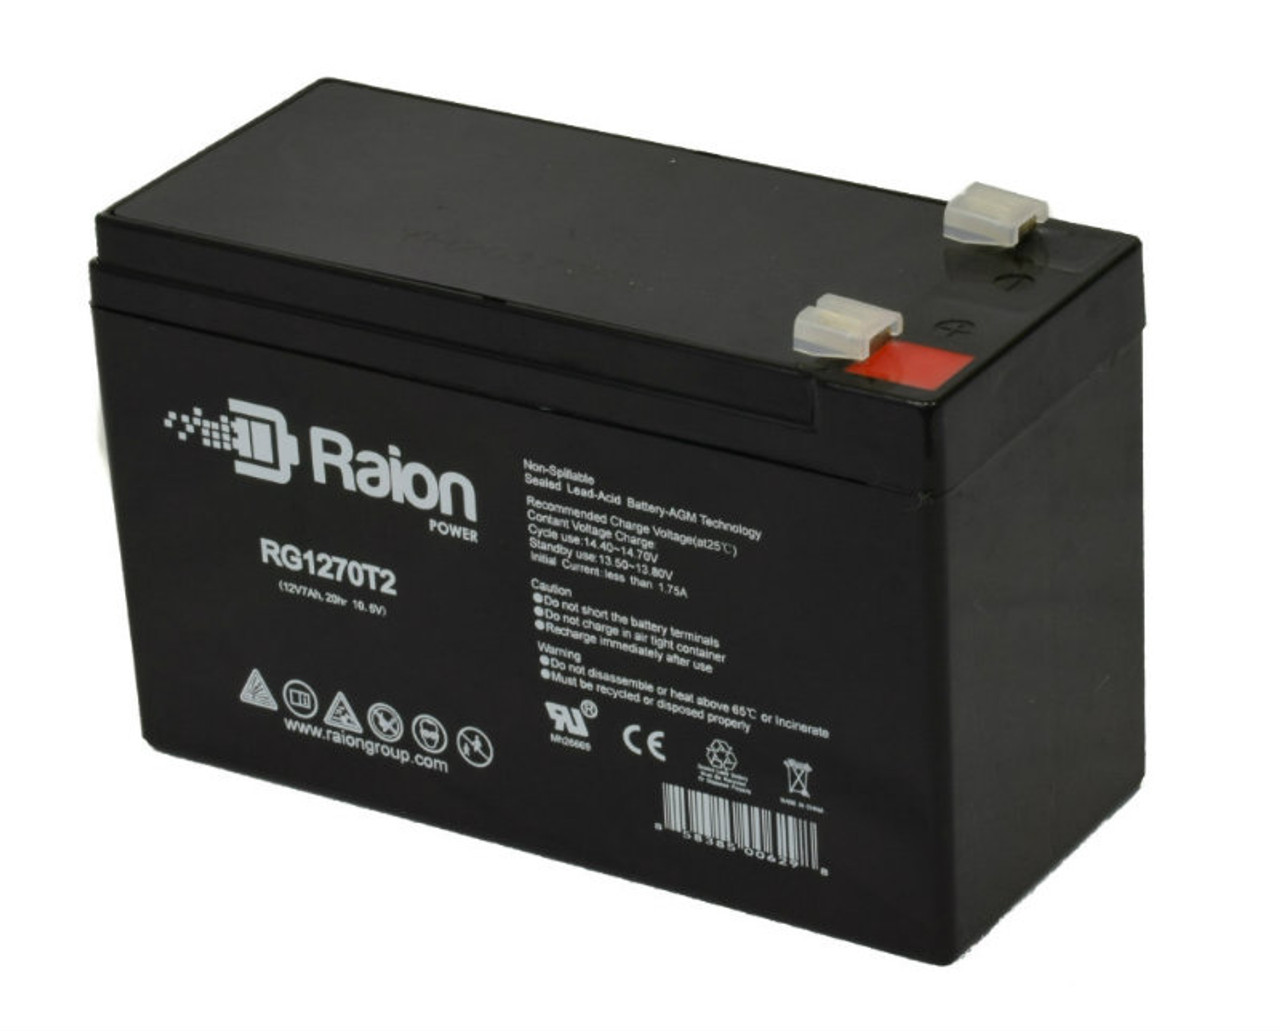 Raion Power RG1270T2 12V 7Ah Rechargeable Battery for Rhino SLA 7-12